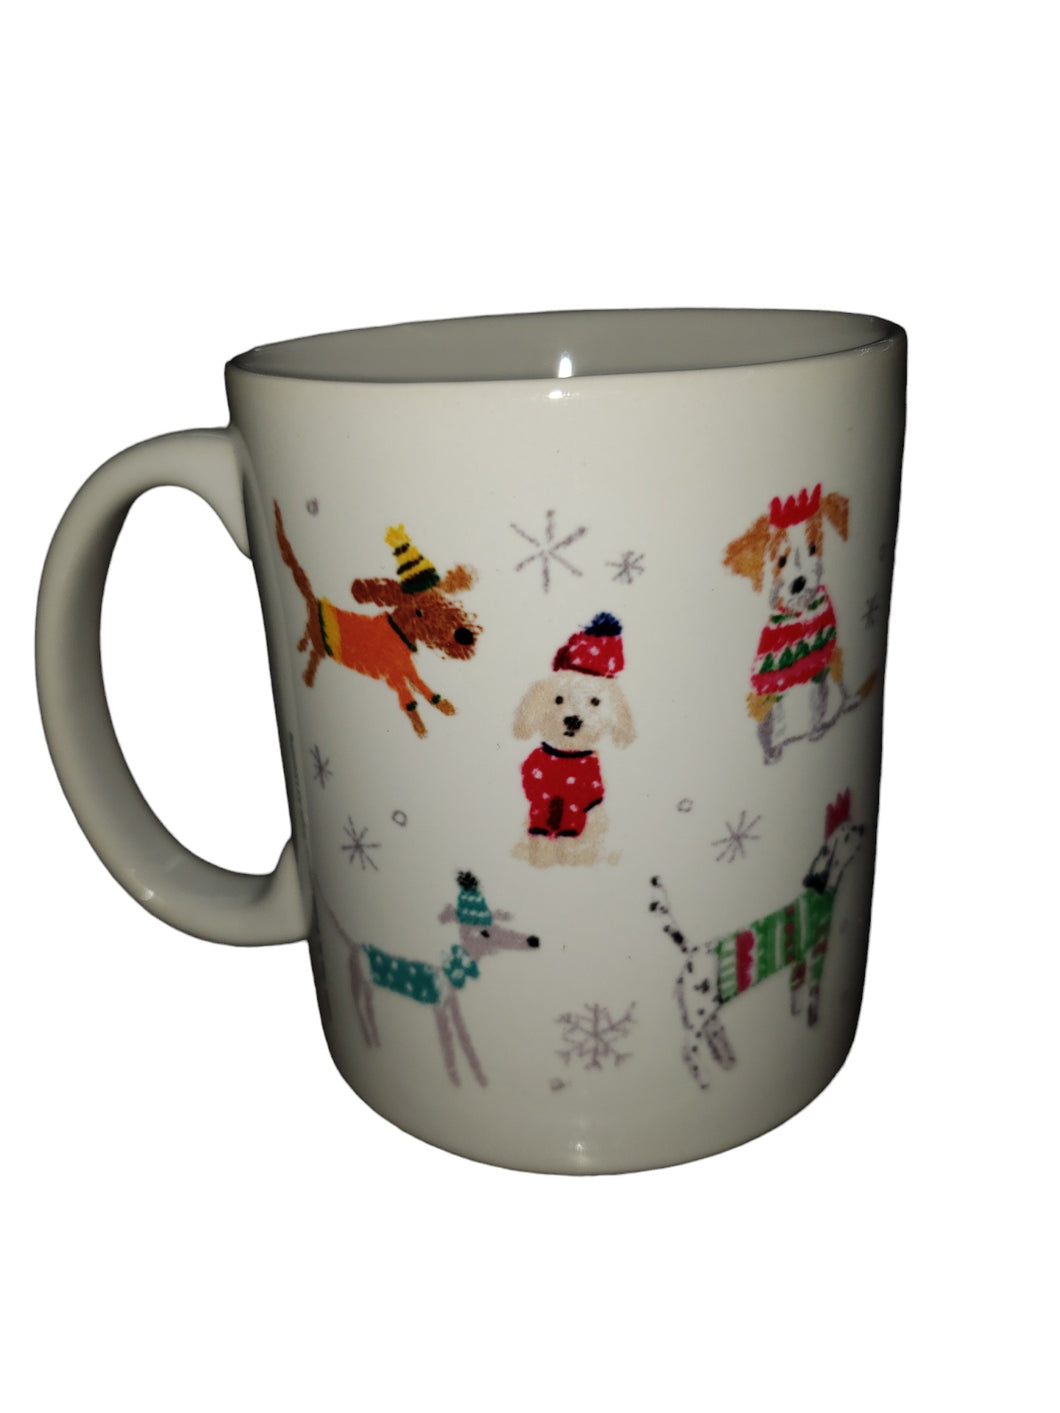 Leanin Tree We Woof You a Merry Christmas Ceramic Gift Mug #56433